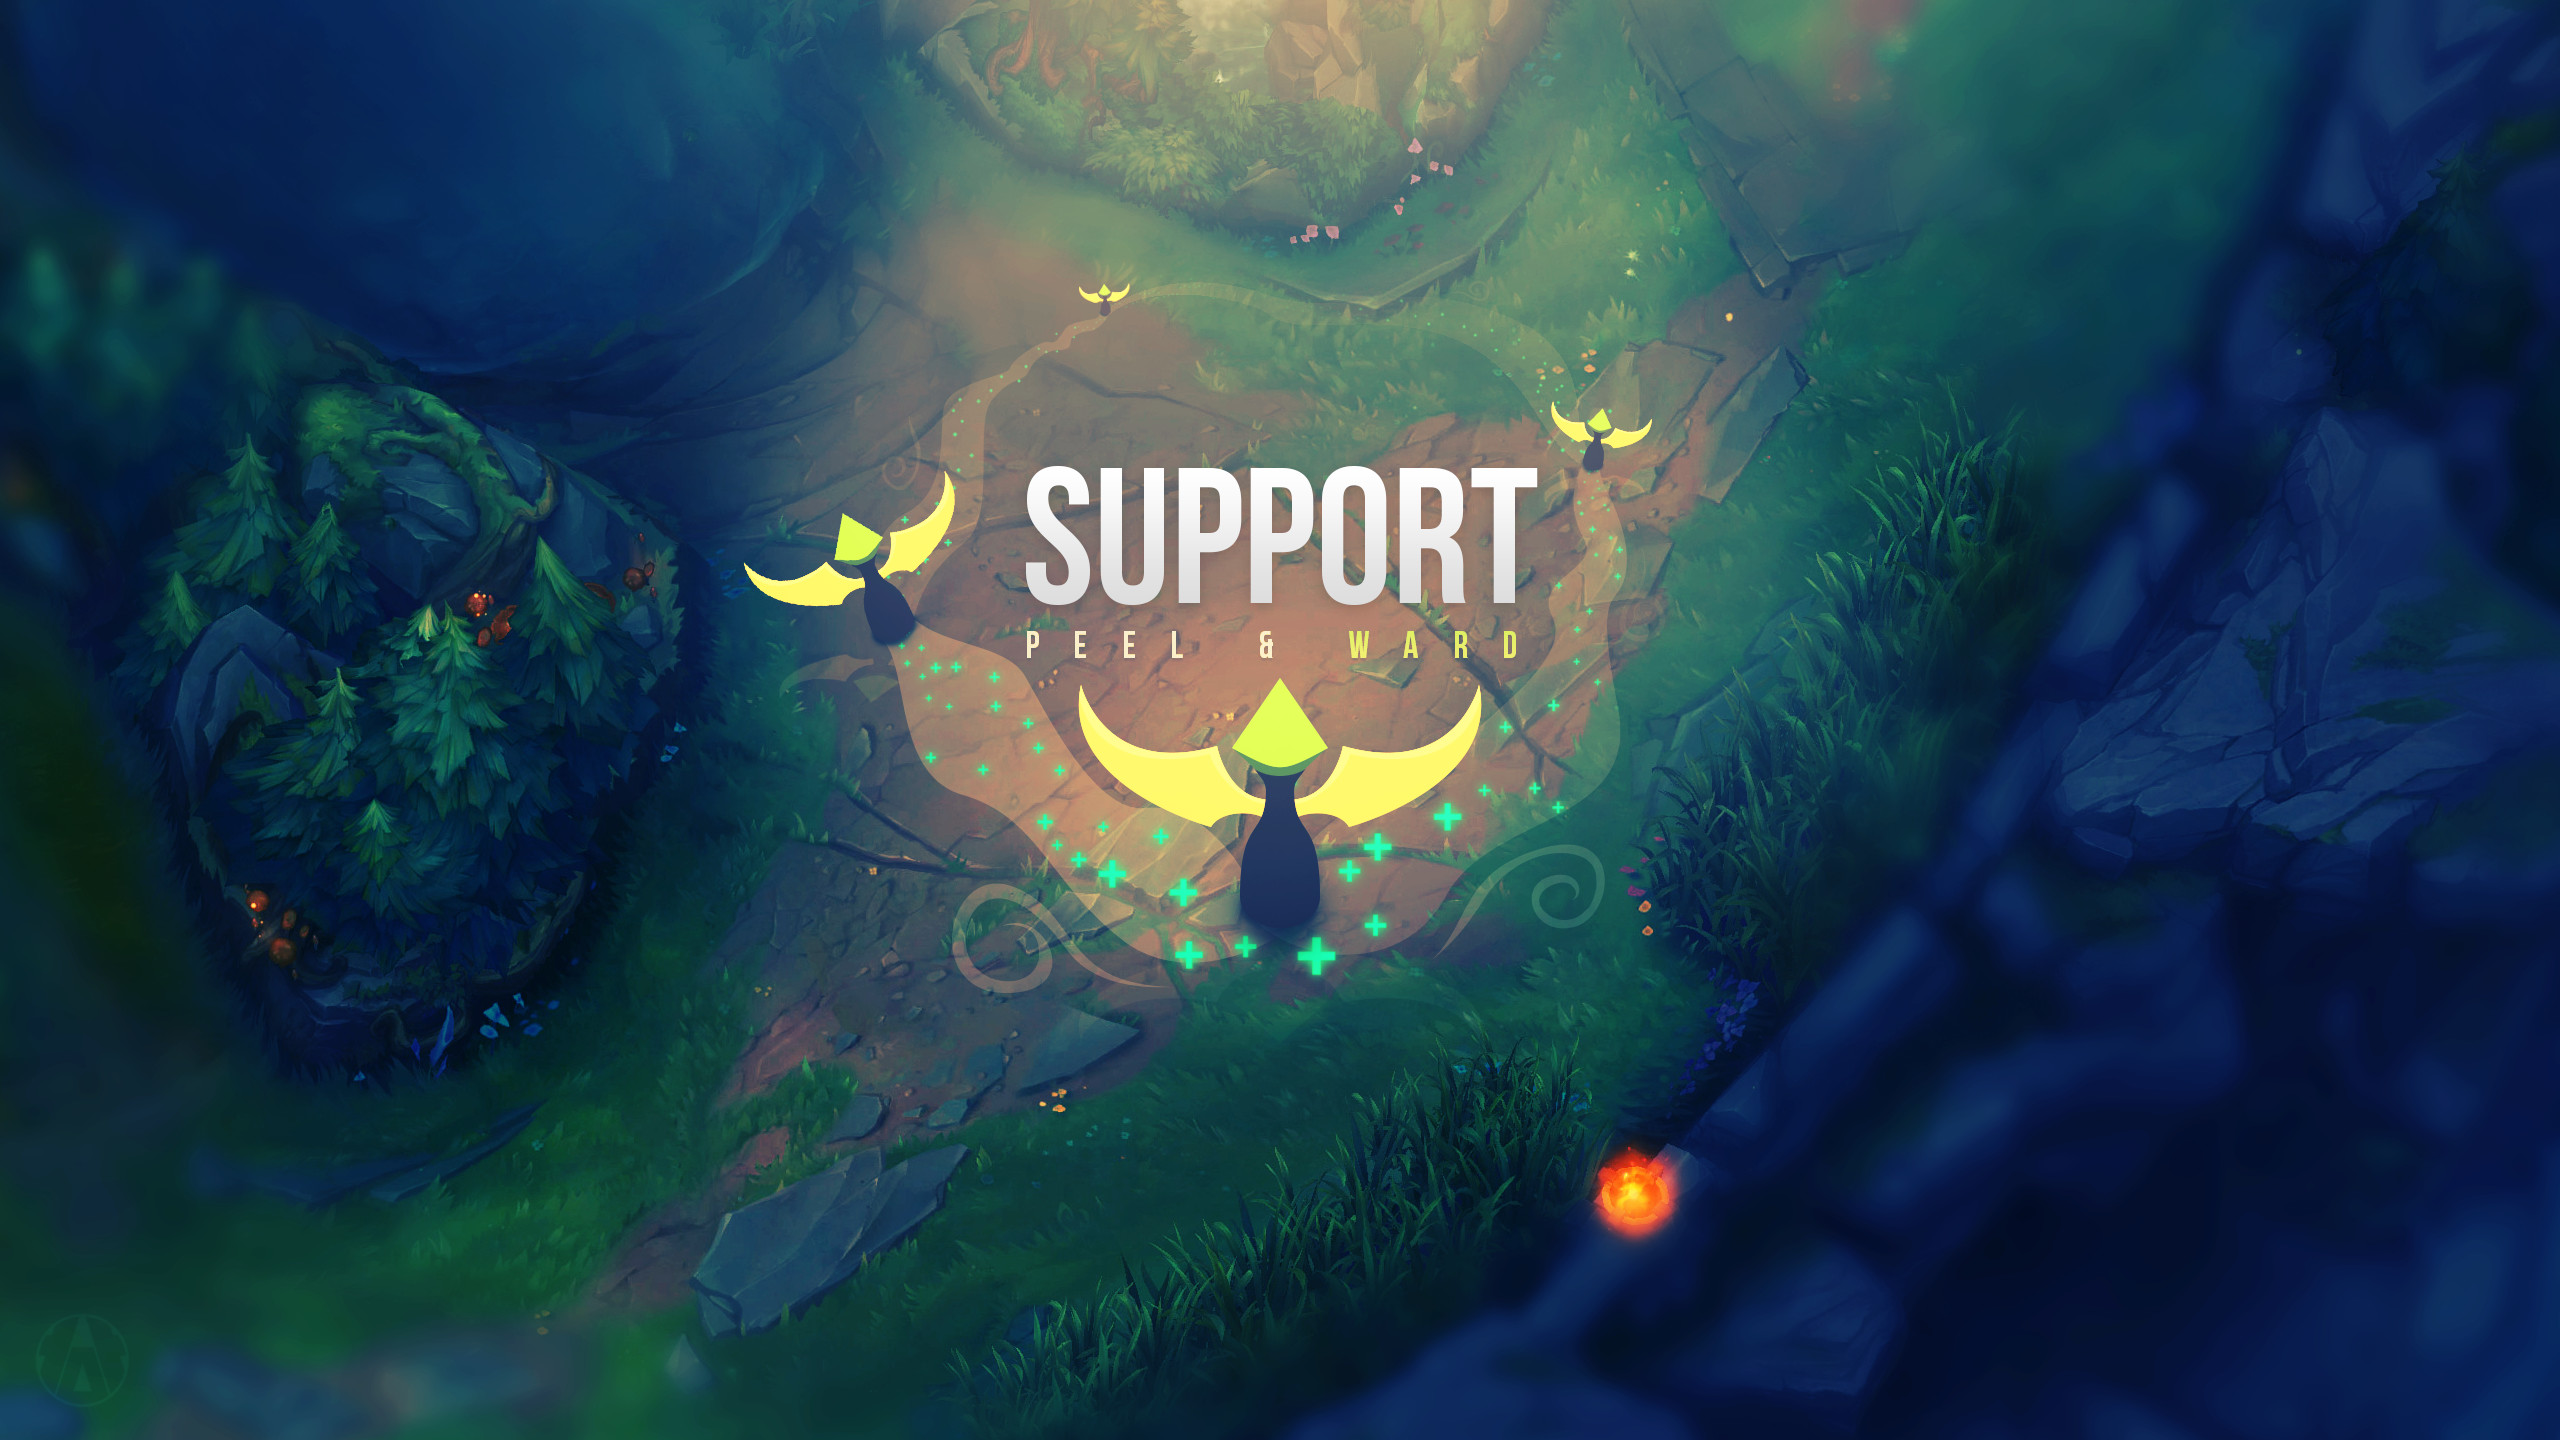 2560x1440 lol support wallpaper League of Legends Support Wallpaper